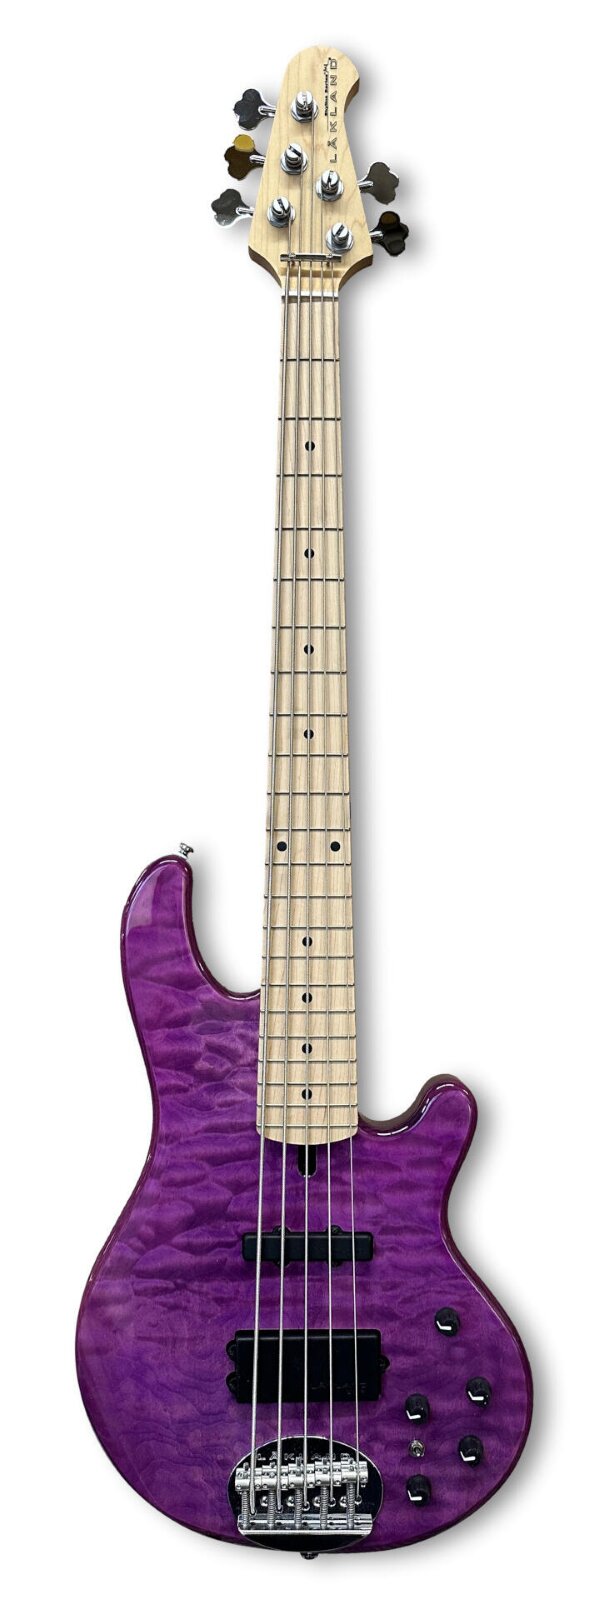 LAKLAND Skyline 55-02 Deluxe Bass, 5-String - Translucent Purple Gloss : photo 1